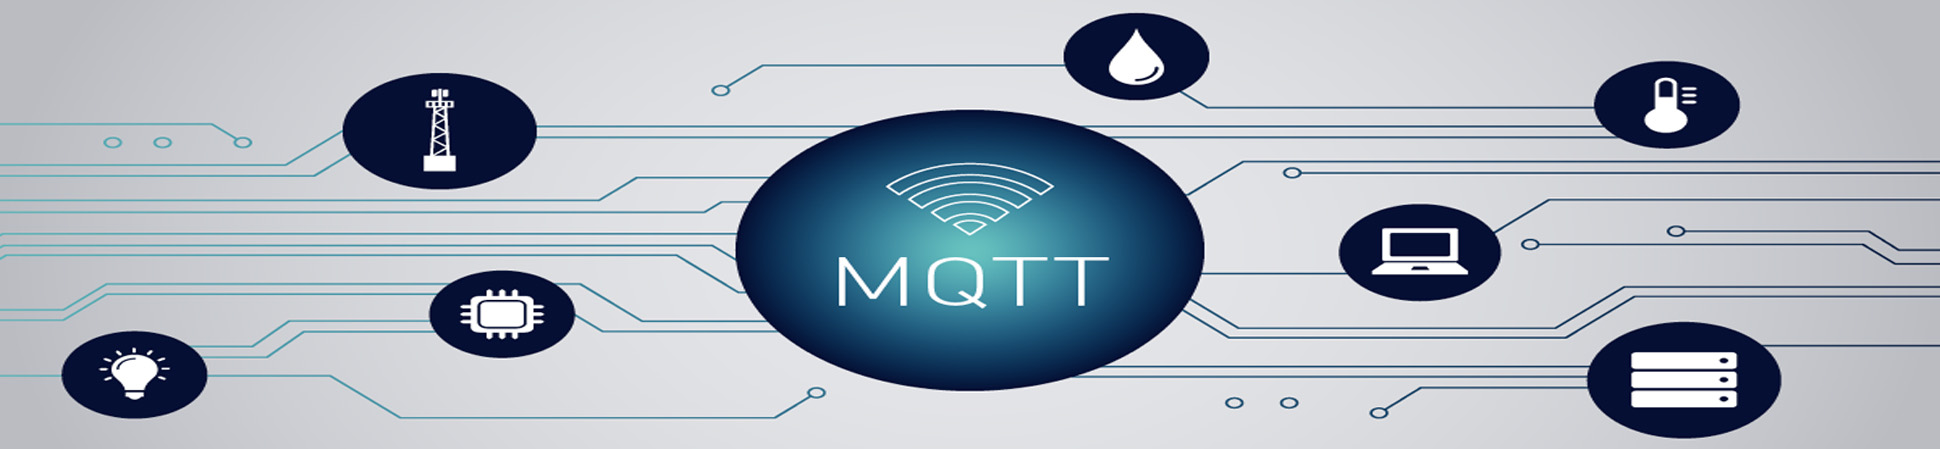 MQTT based wifi gateway